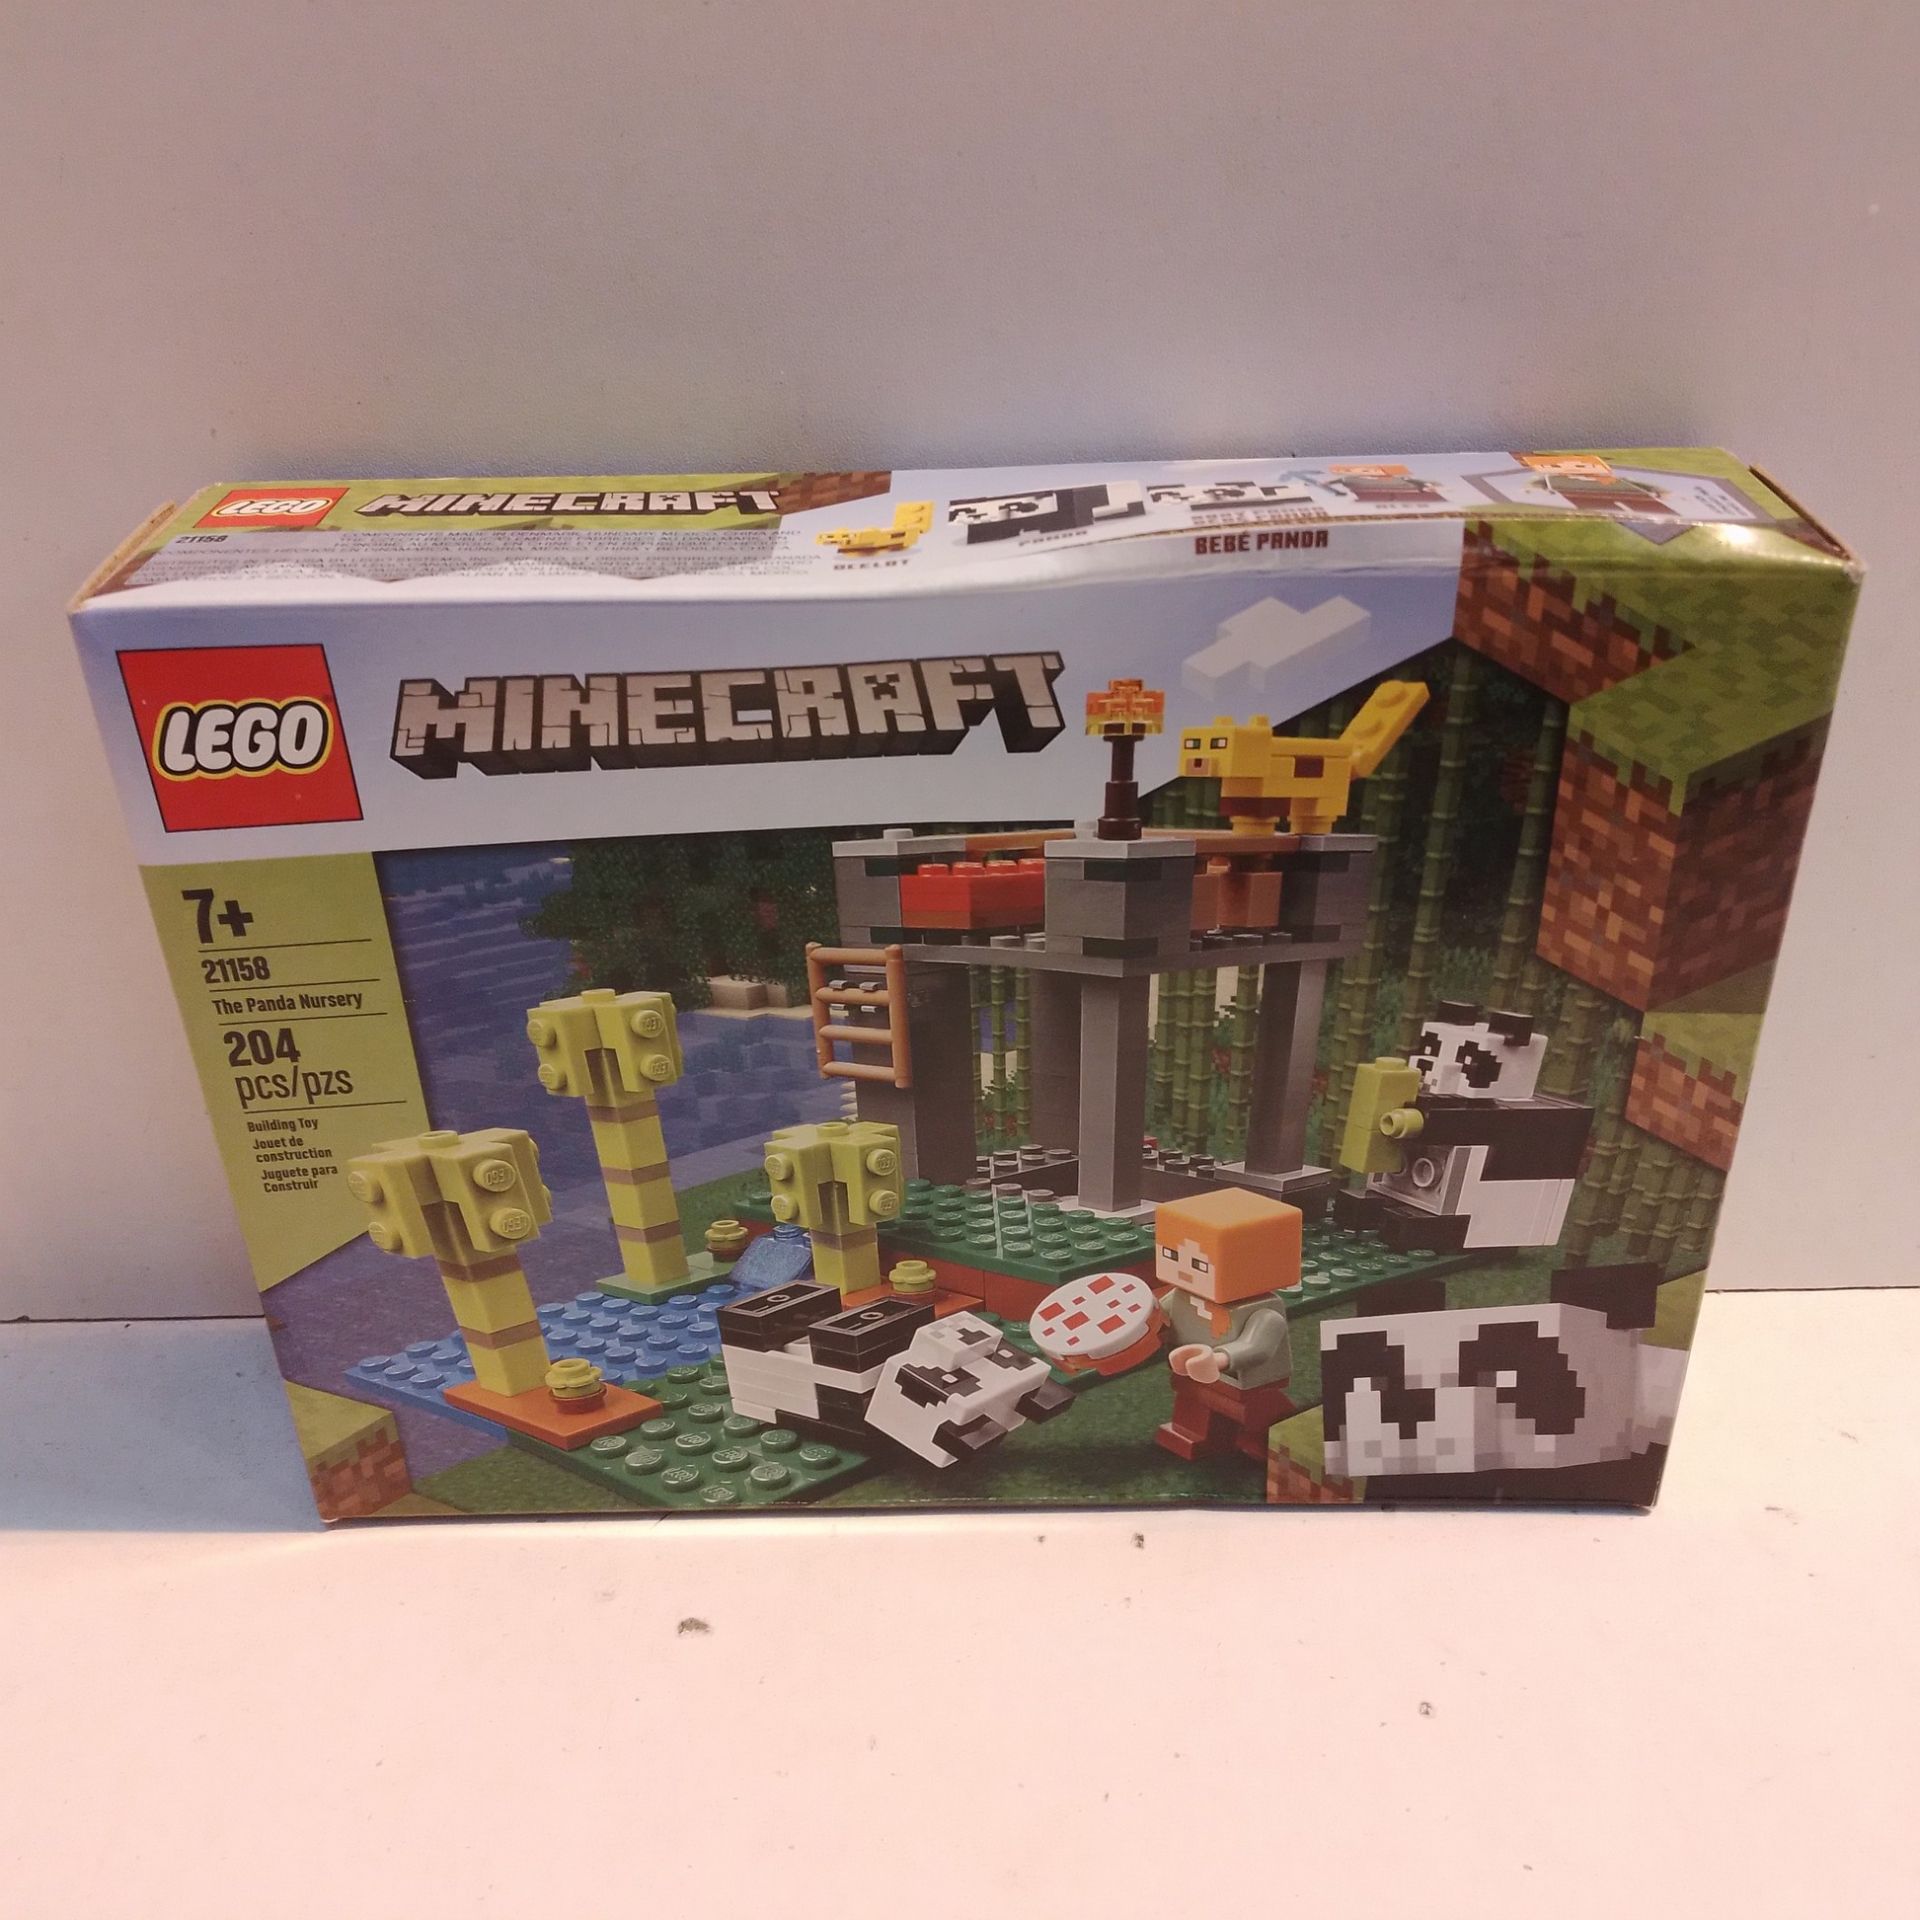 RRP £23.75 LEGO 21158 Minecraft The Panda Nursery Building Set with Alex & Animal Figures - Image 2 of 2